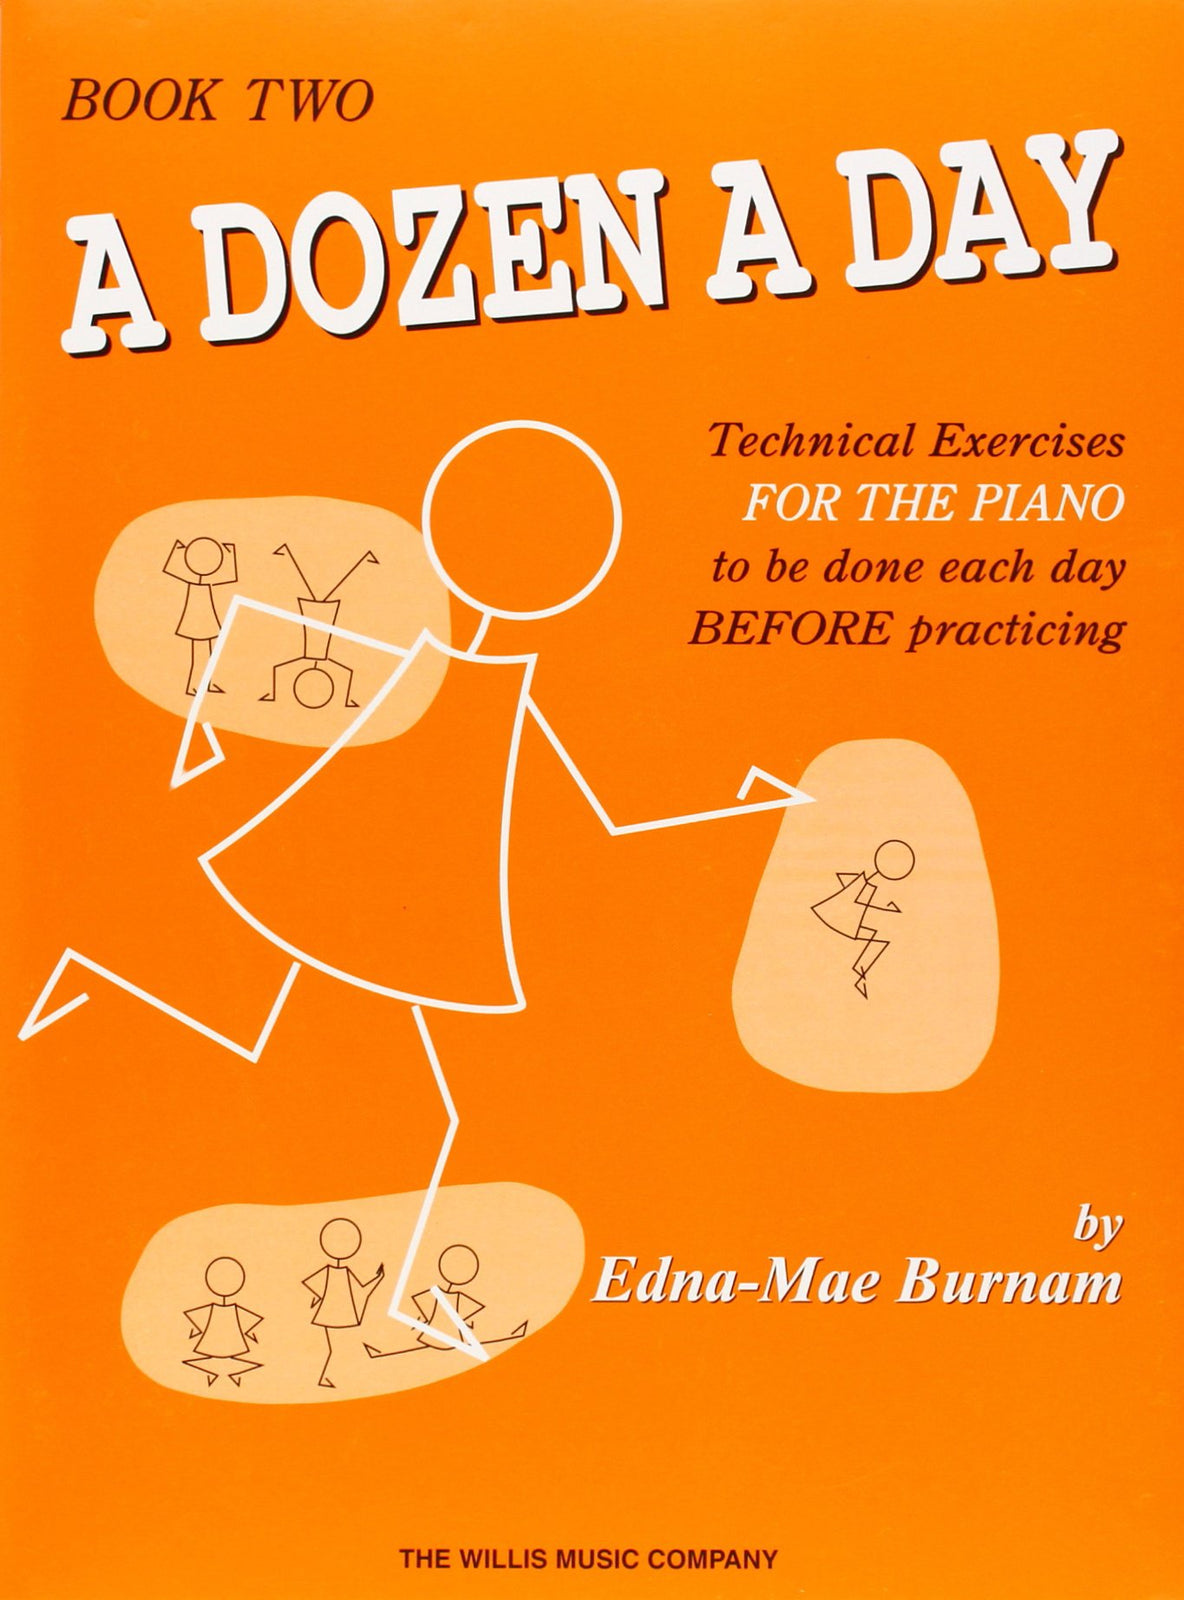 A Dozen A Day by Edna Mae Burnam - Book 2